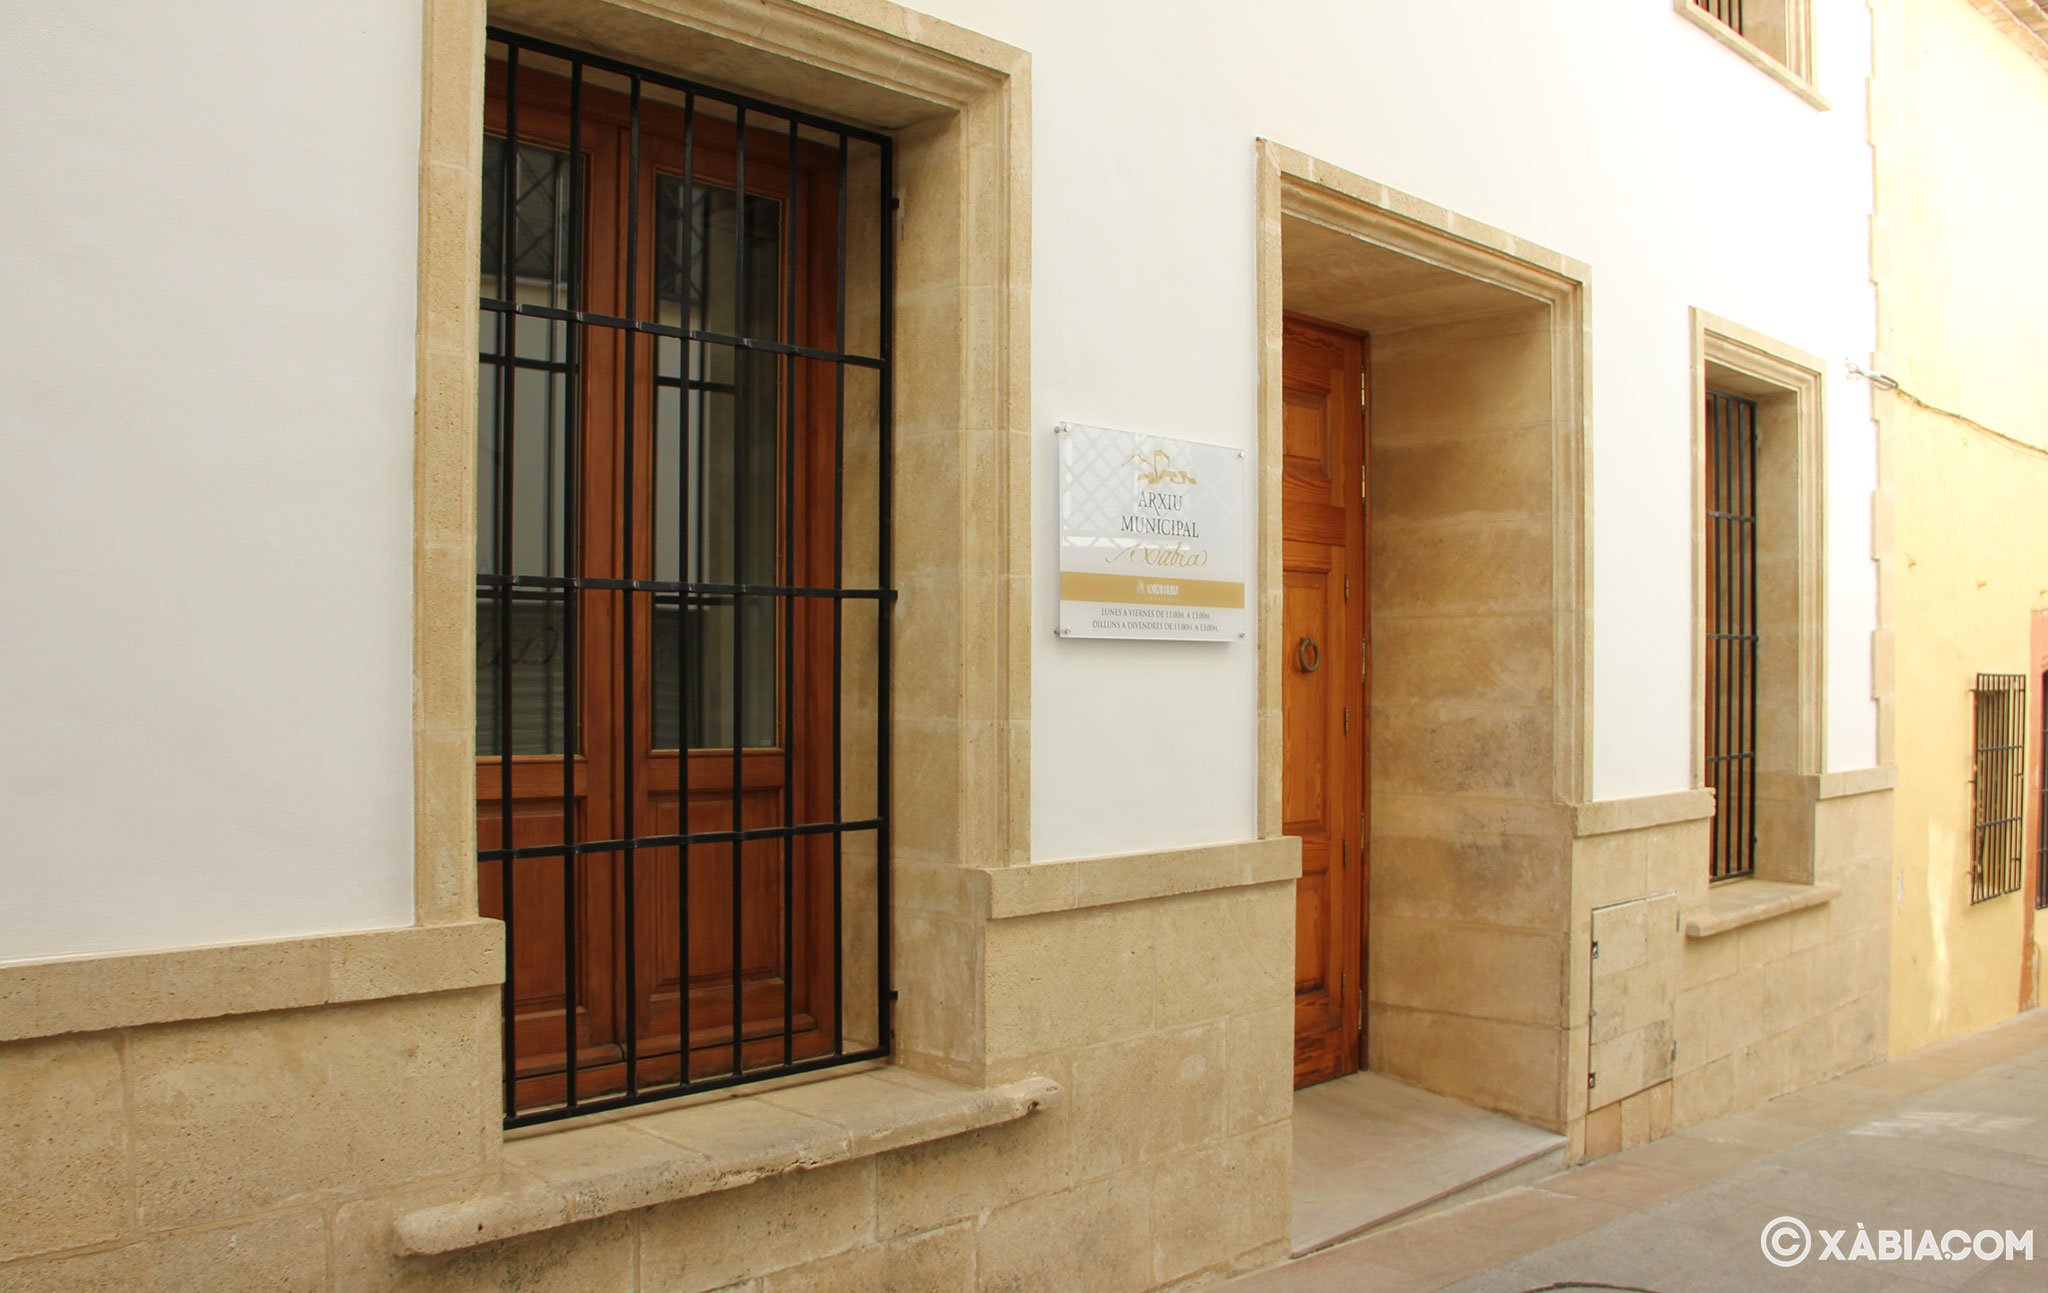 Entrada de Archivo Municipal de Jávea